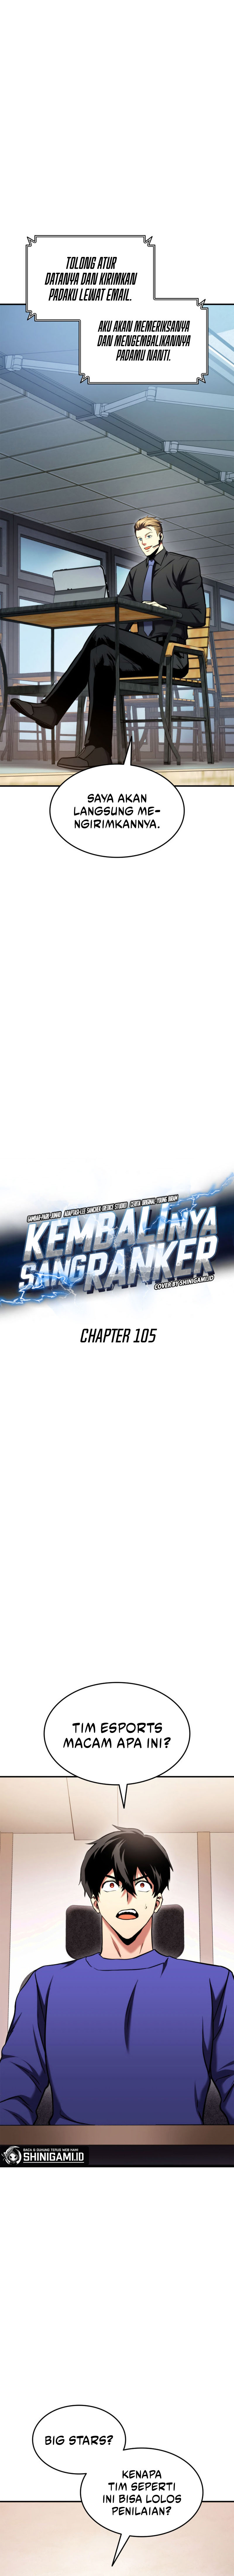 Ranker'S Return (Remake) Chapter 105 - 135